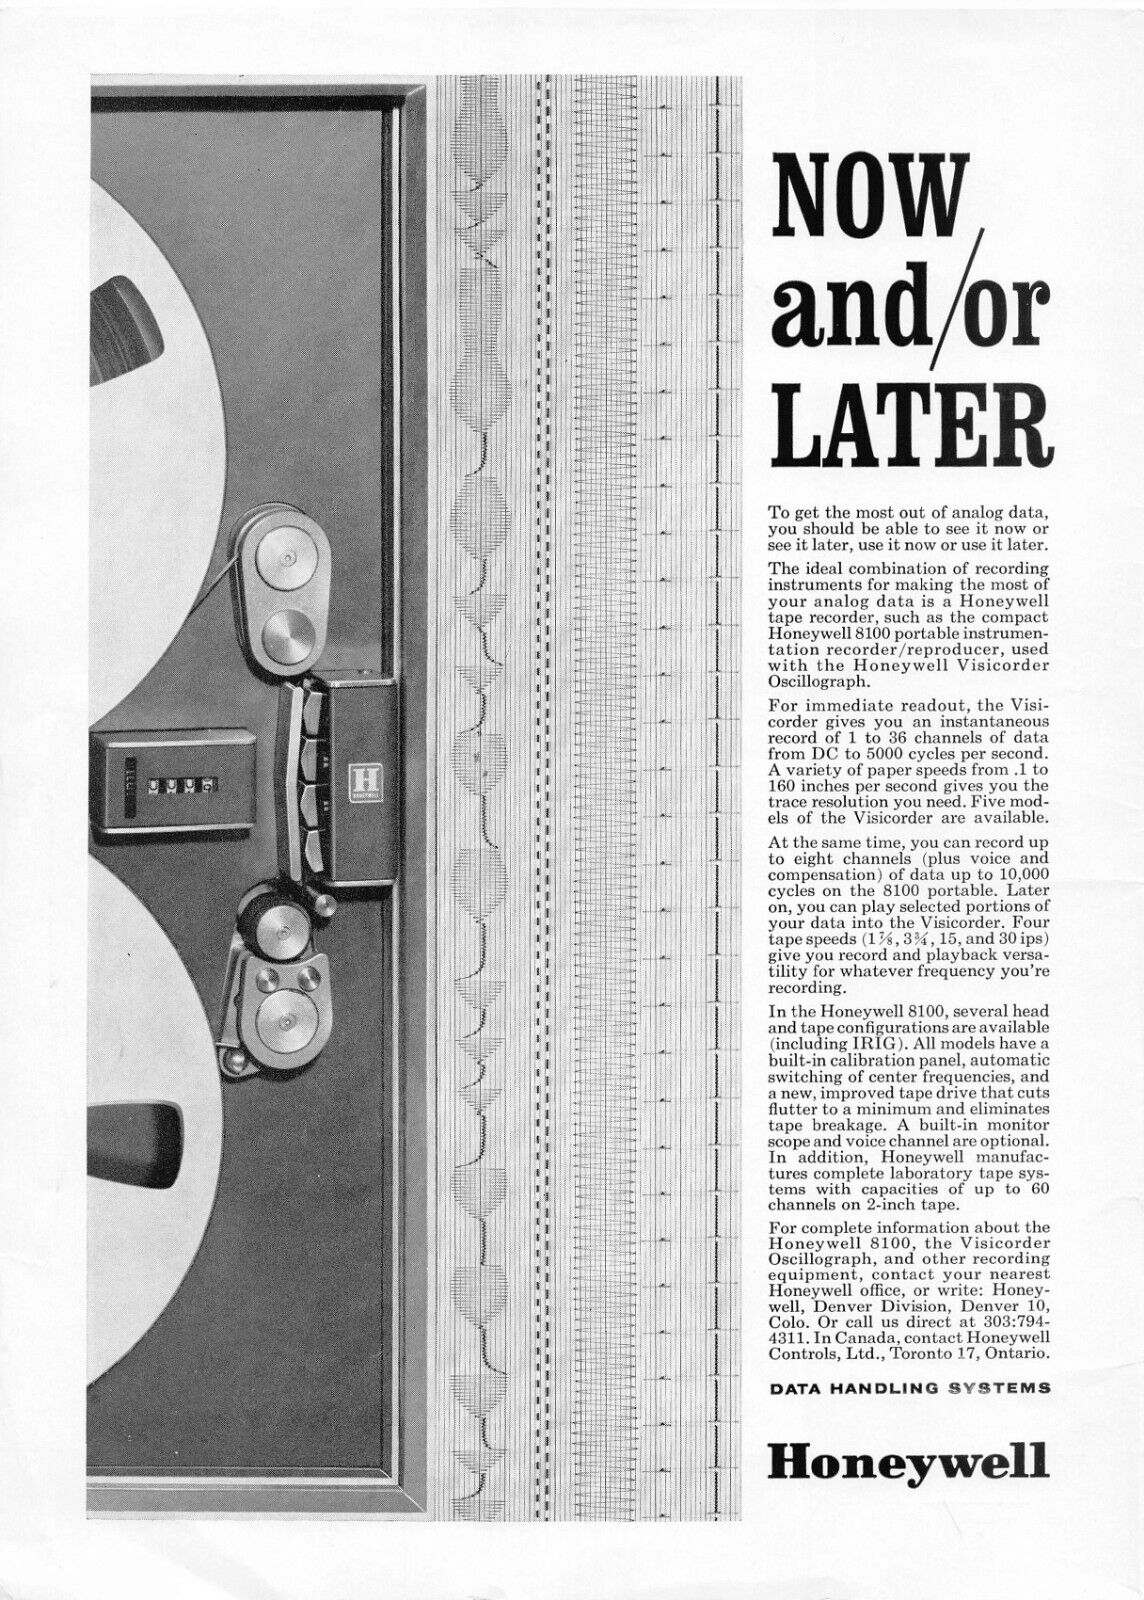 Honeywell Analog Data 8100 Portable Recorder Vintage Print Ad